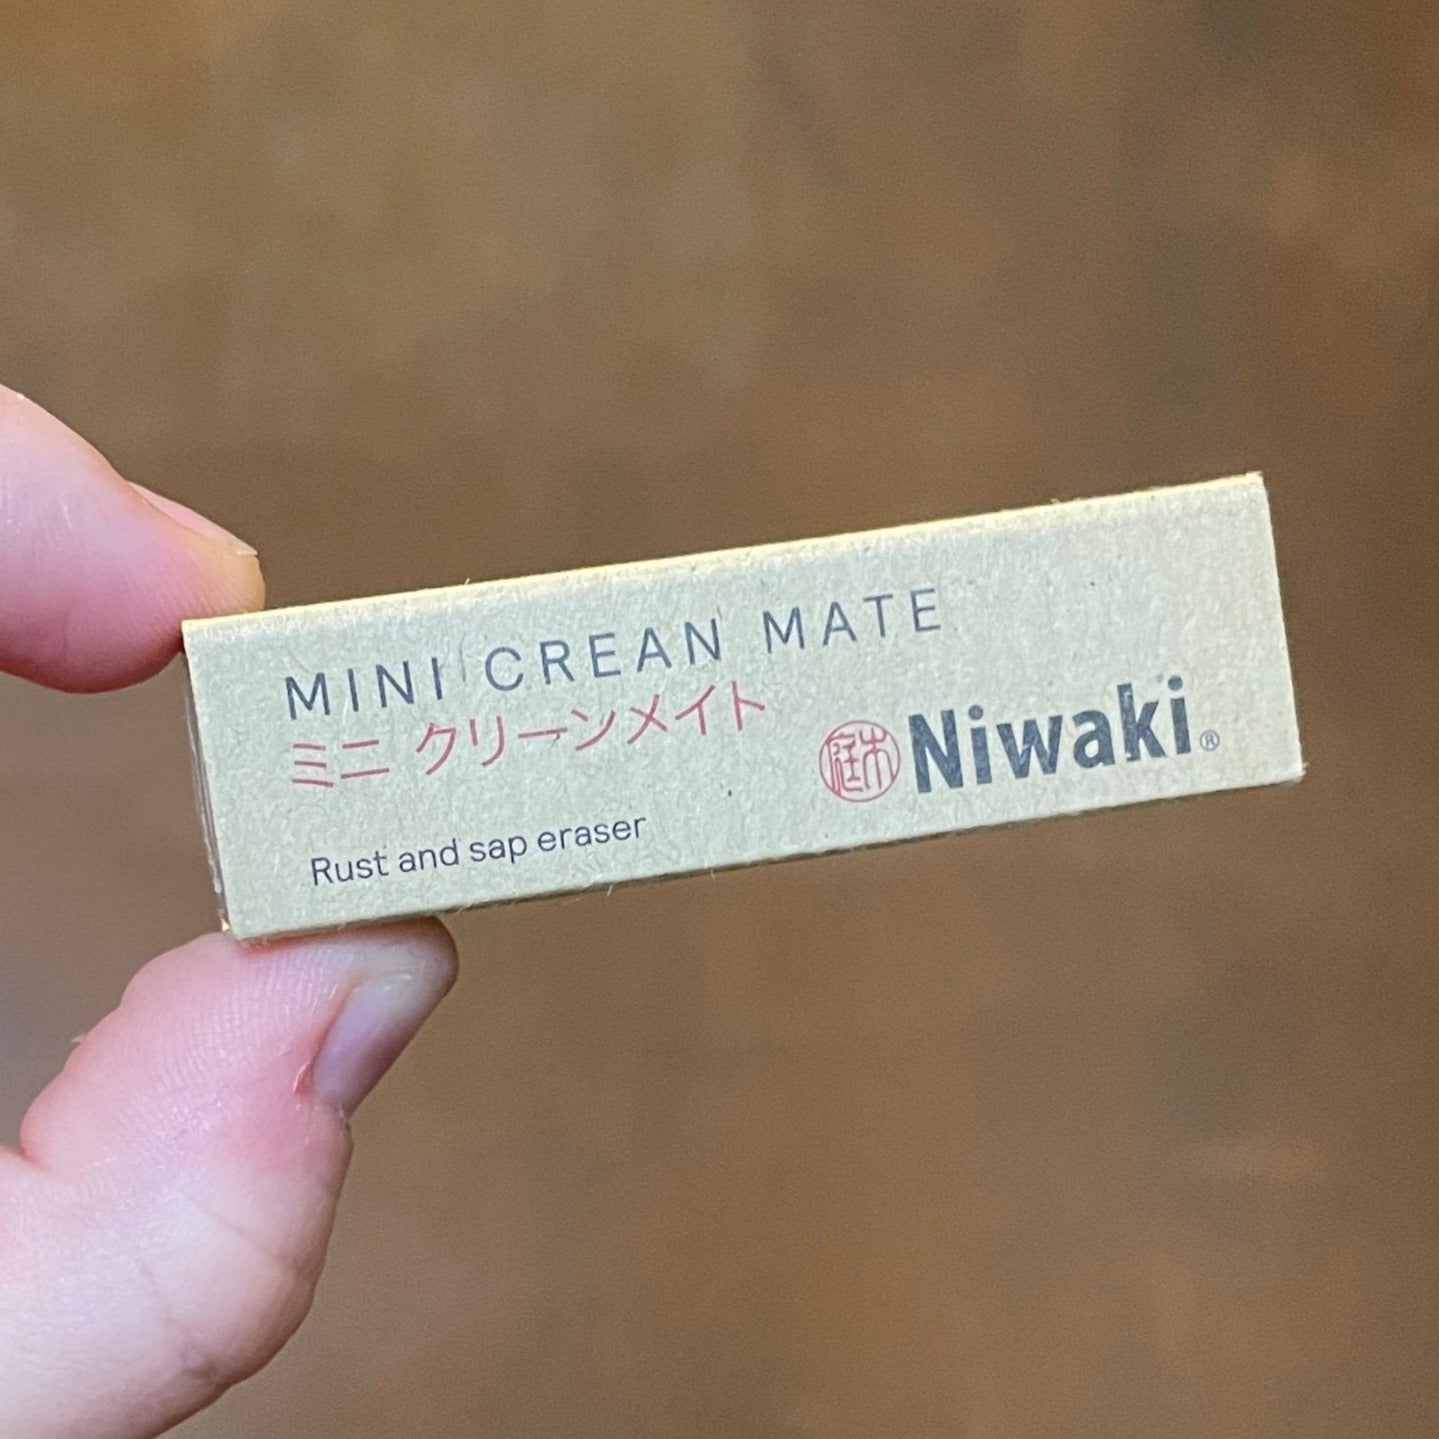 Niwaki Mini Crean Mate - grow urban. UK